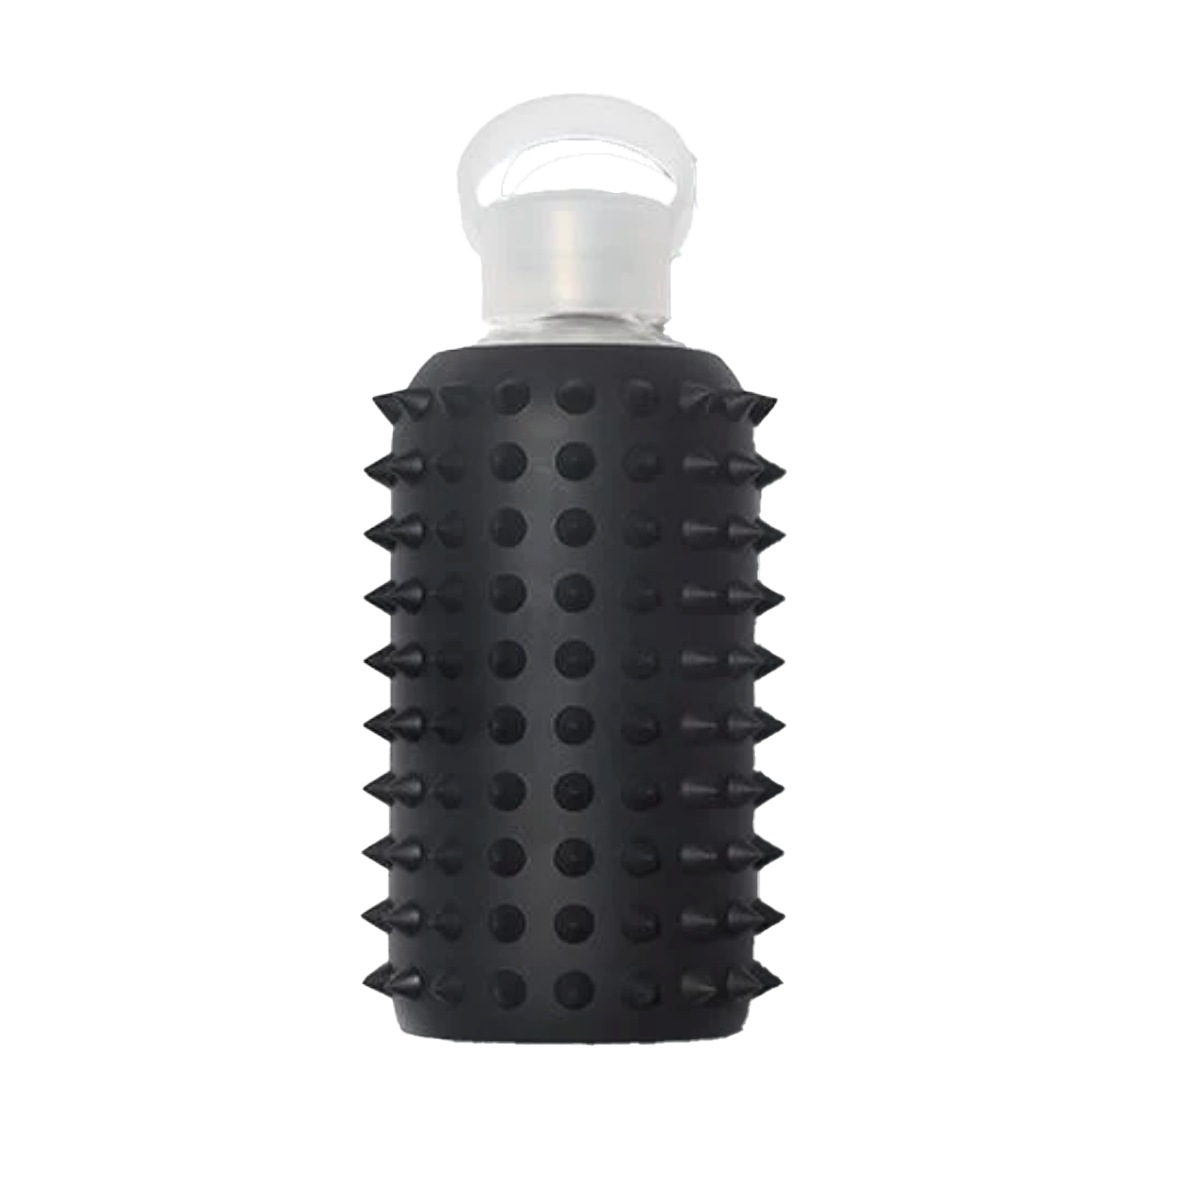 BKR Spiked Water Bottle